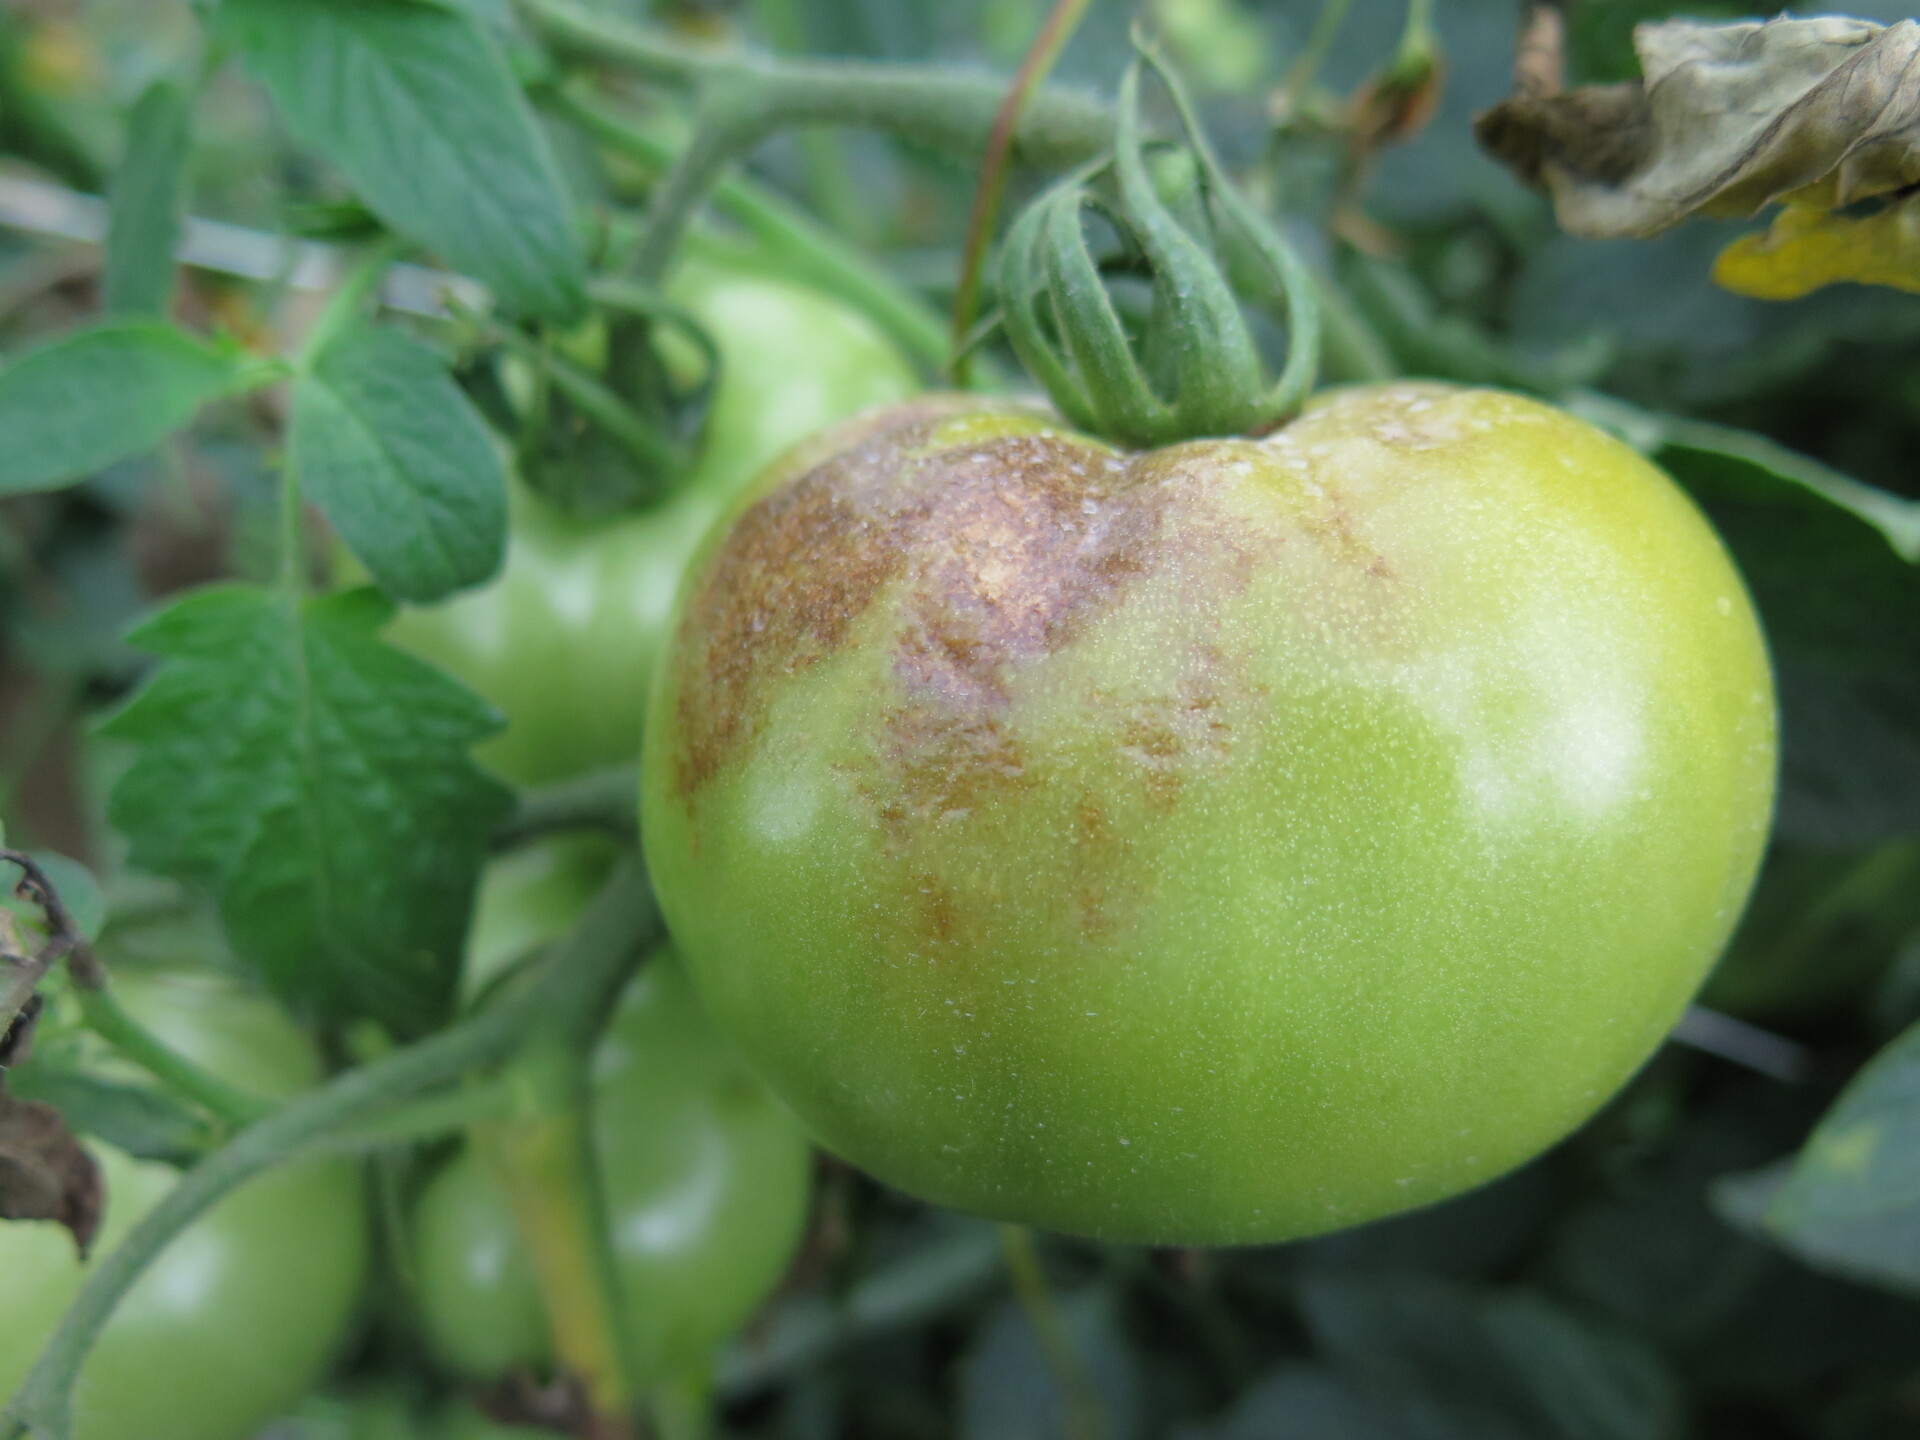 Late blight symptoms on tomato fruit